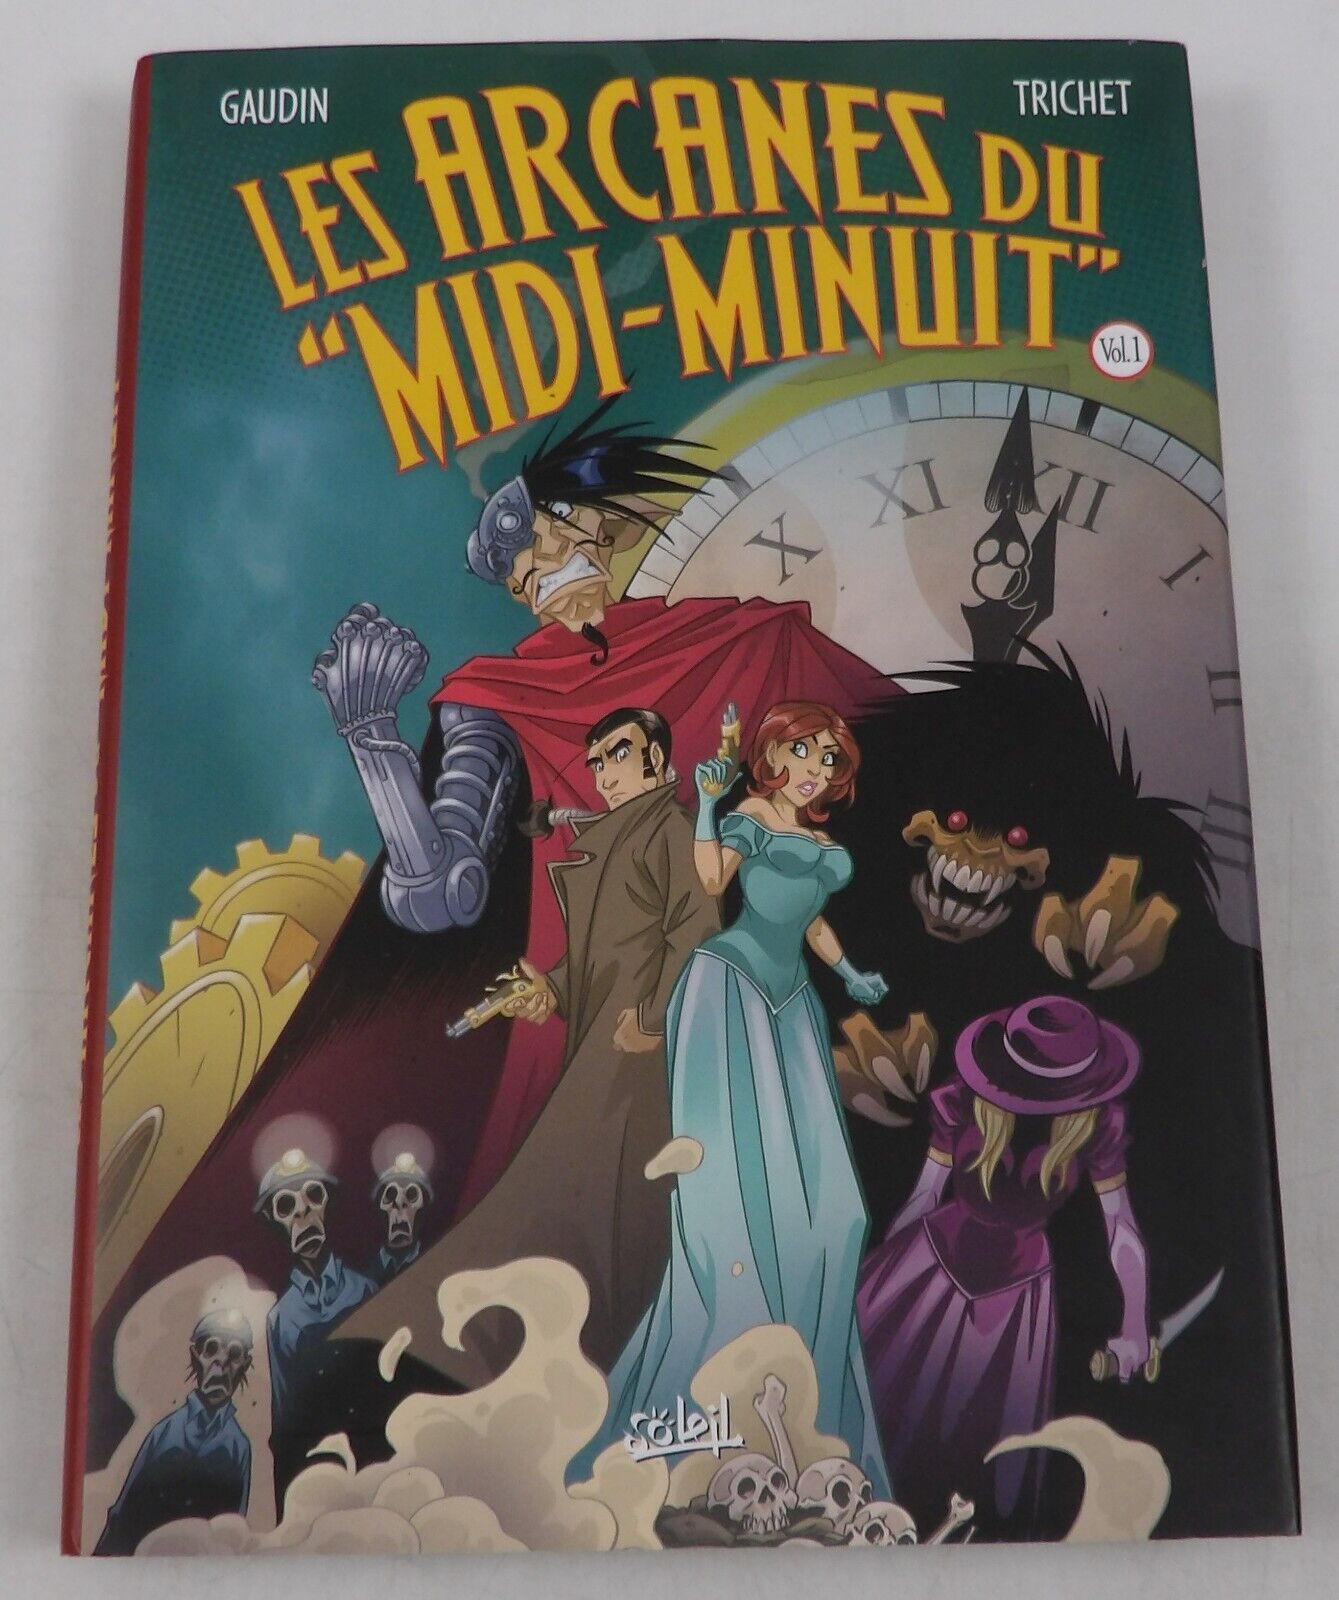 Les Arcanes Du Midi-Minuit Vol. 1 HC DJ Jean-Charles Gaudin - Soleil - French